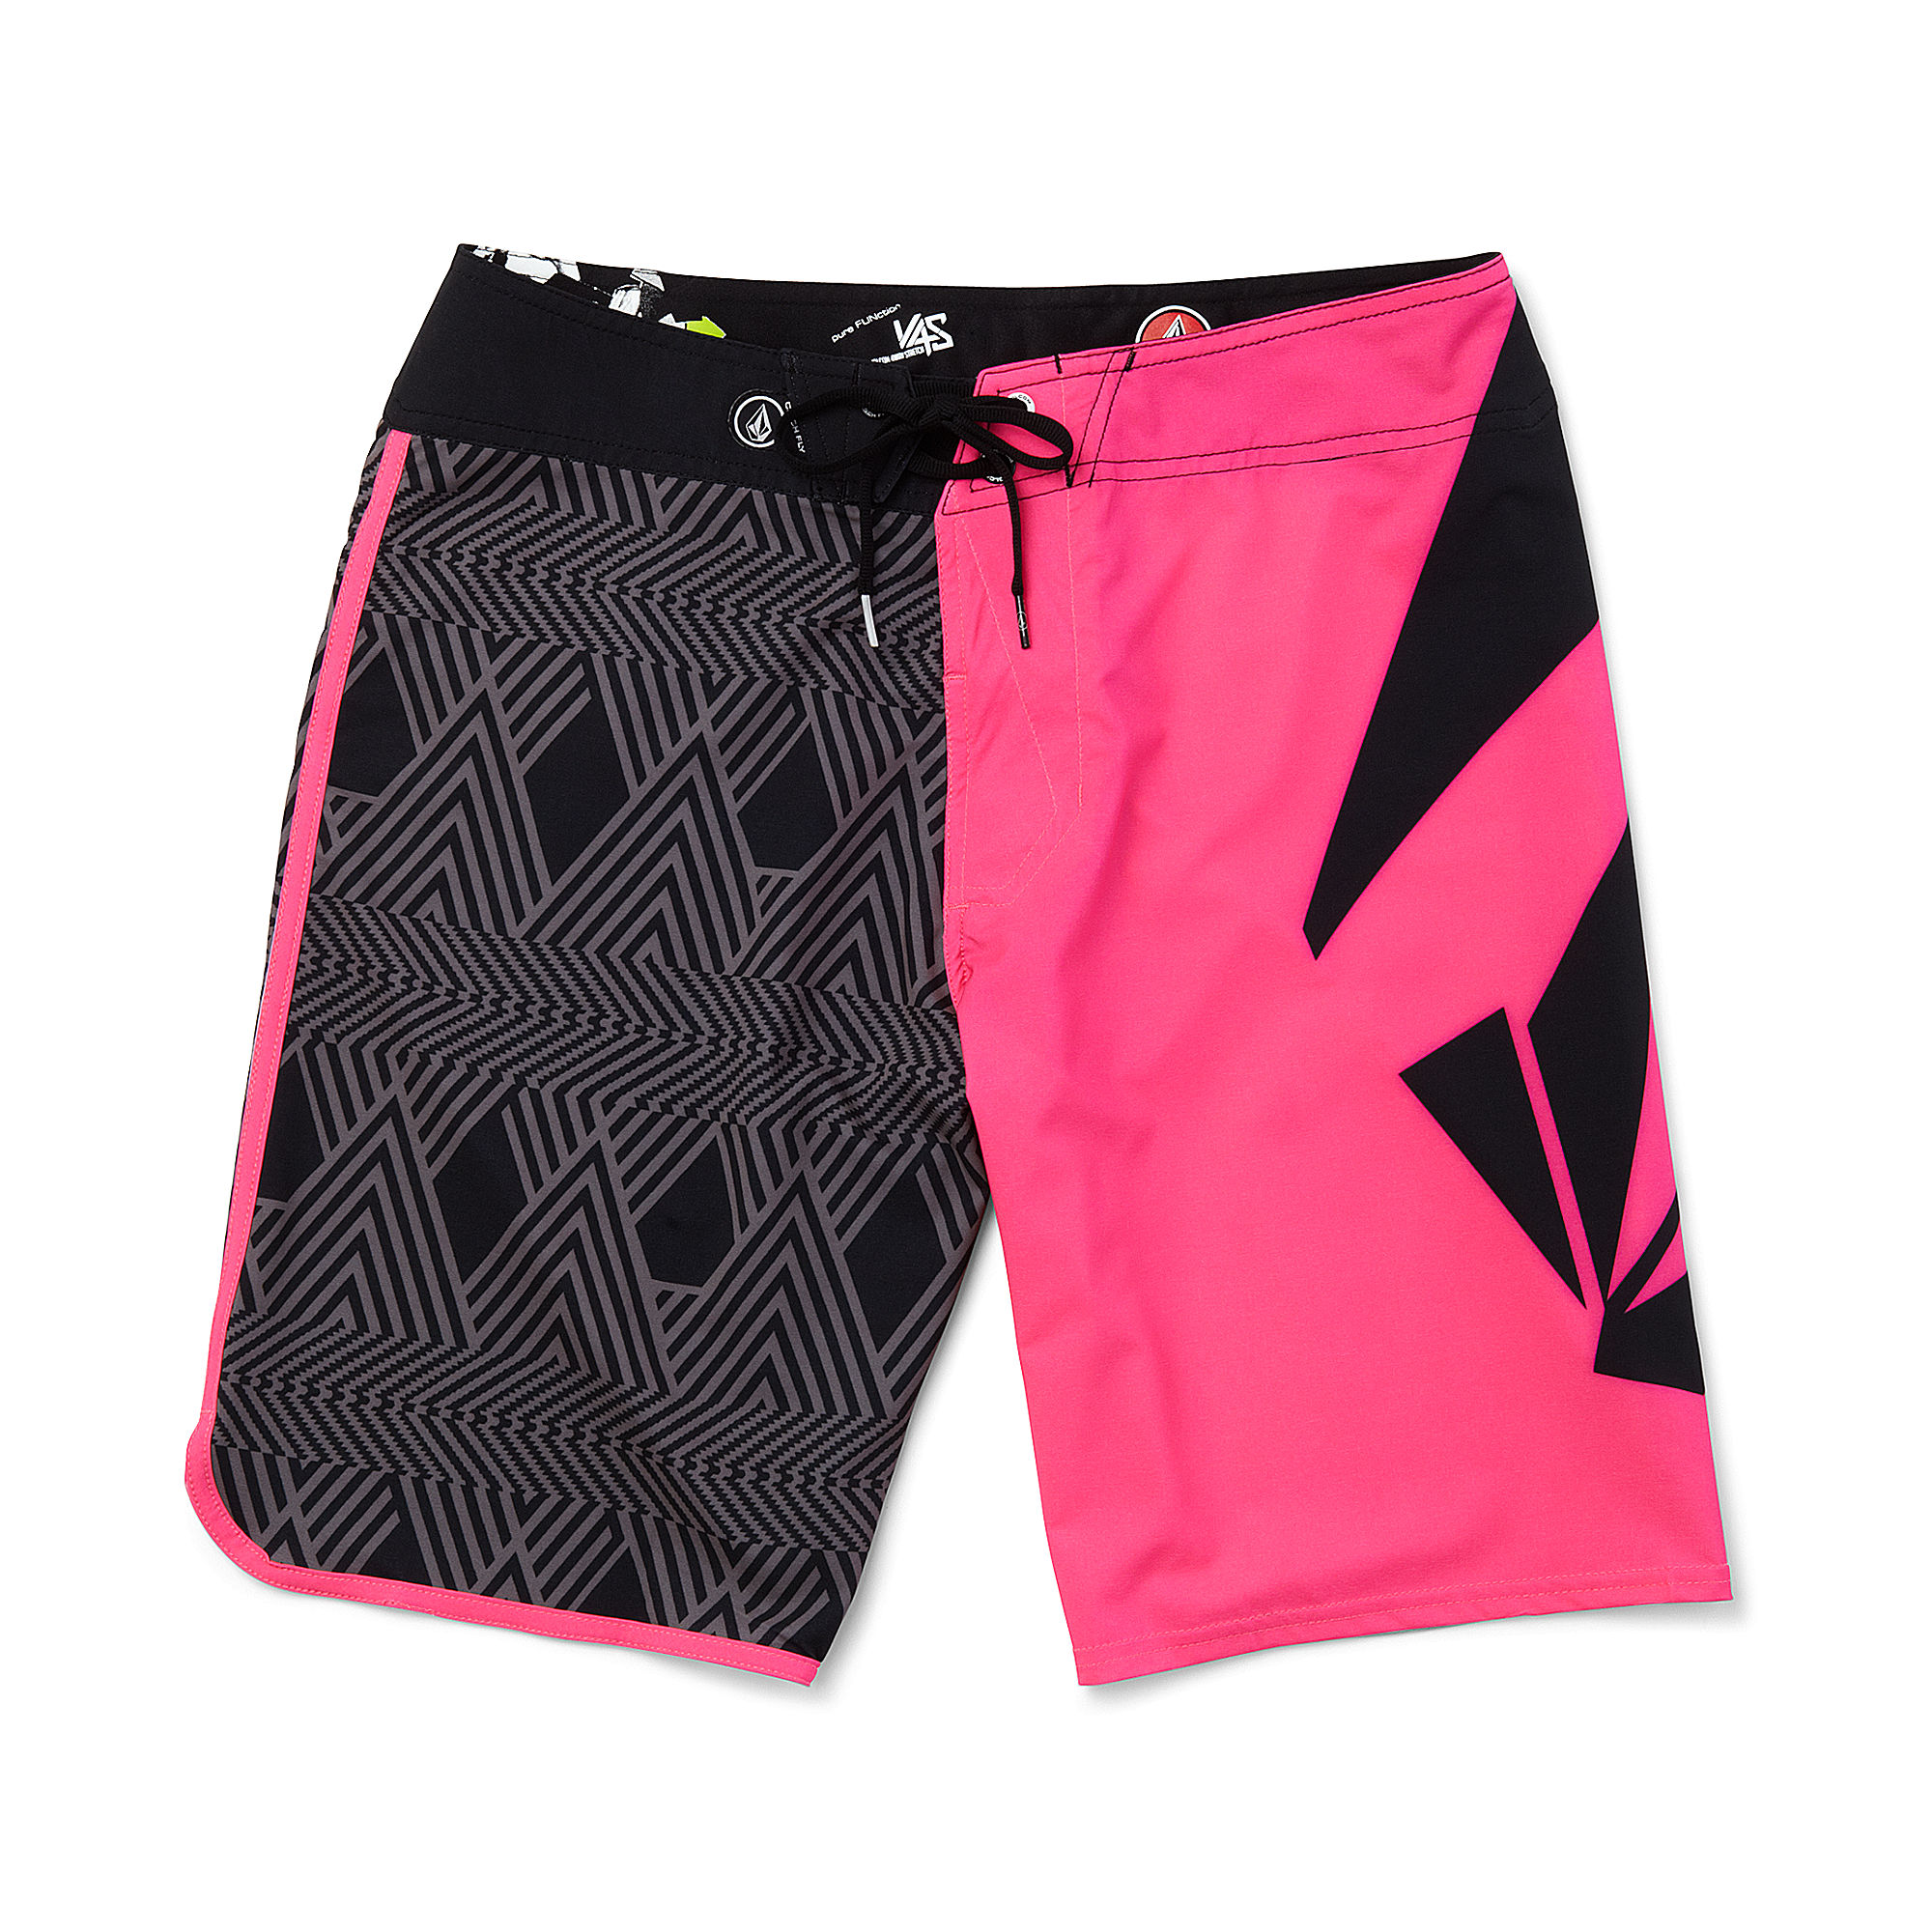 Volcom Annihilator What Graphic Boardshorts in Pink for Men - Lyst